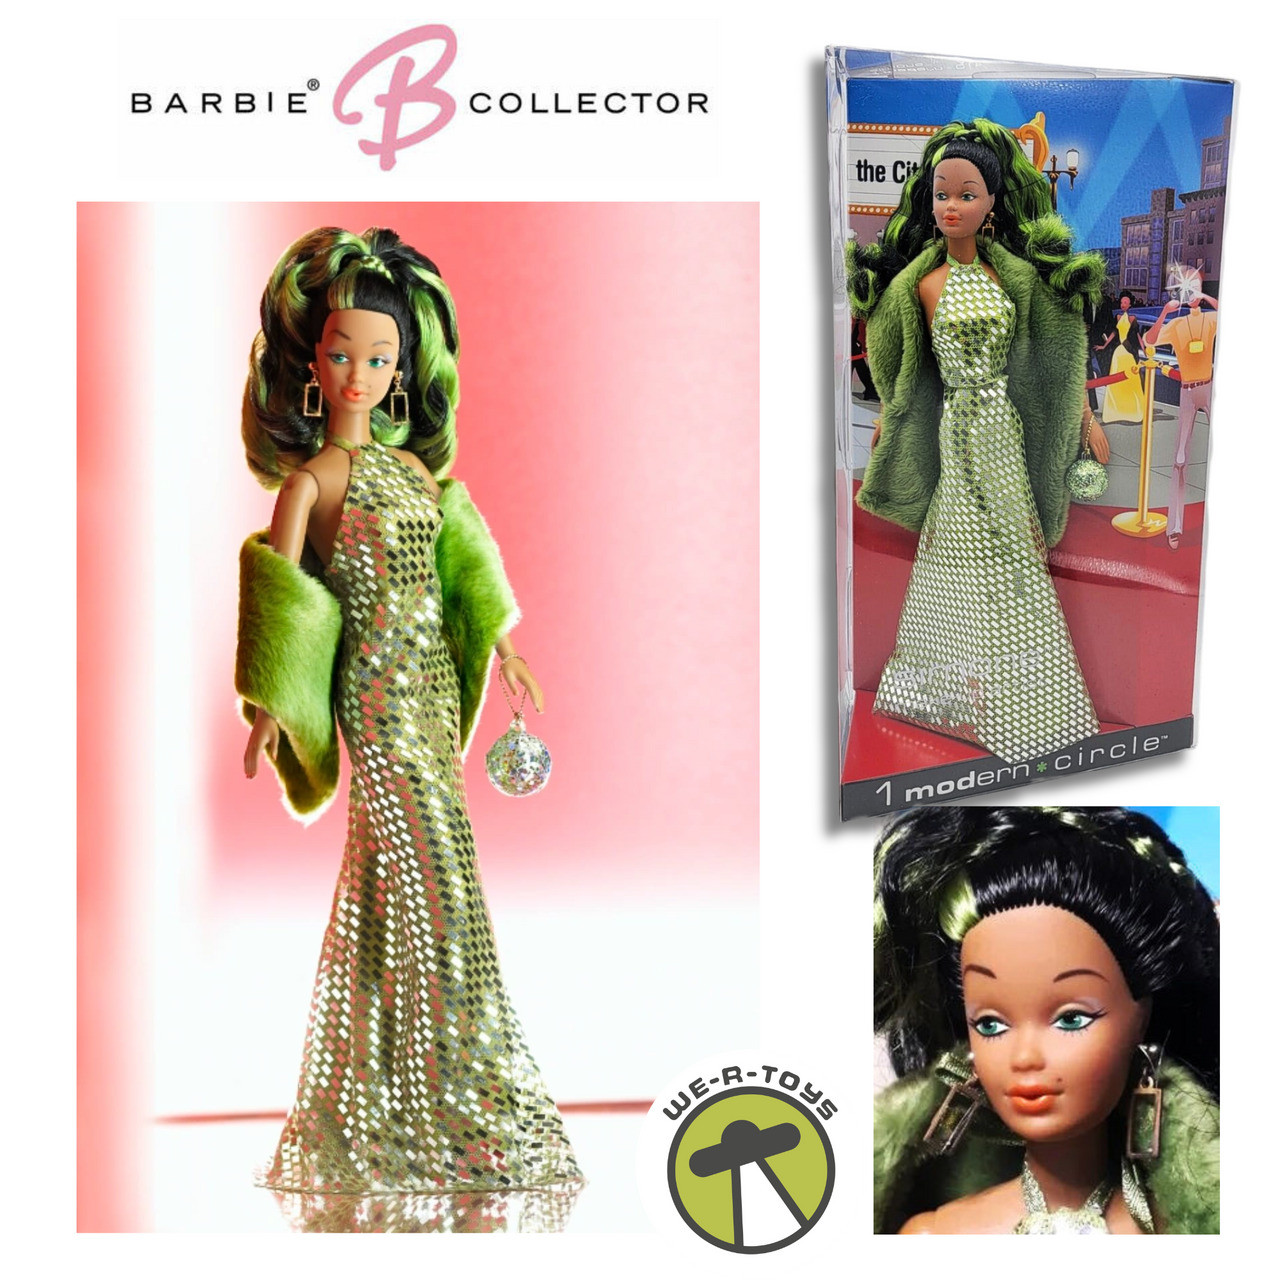 1 Modern Circle Simone Make-Up Artist Barbie Doll 2003 Mattel B2528